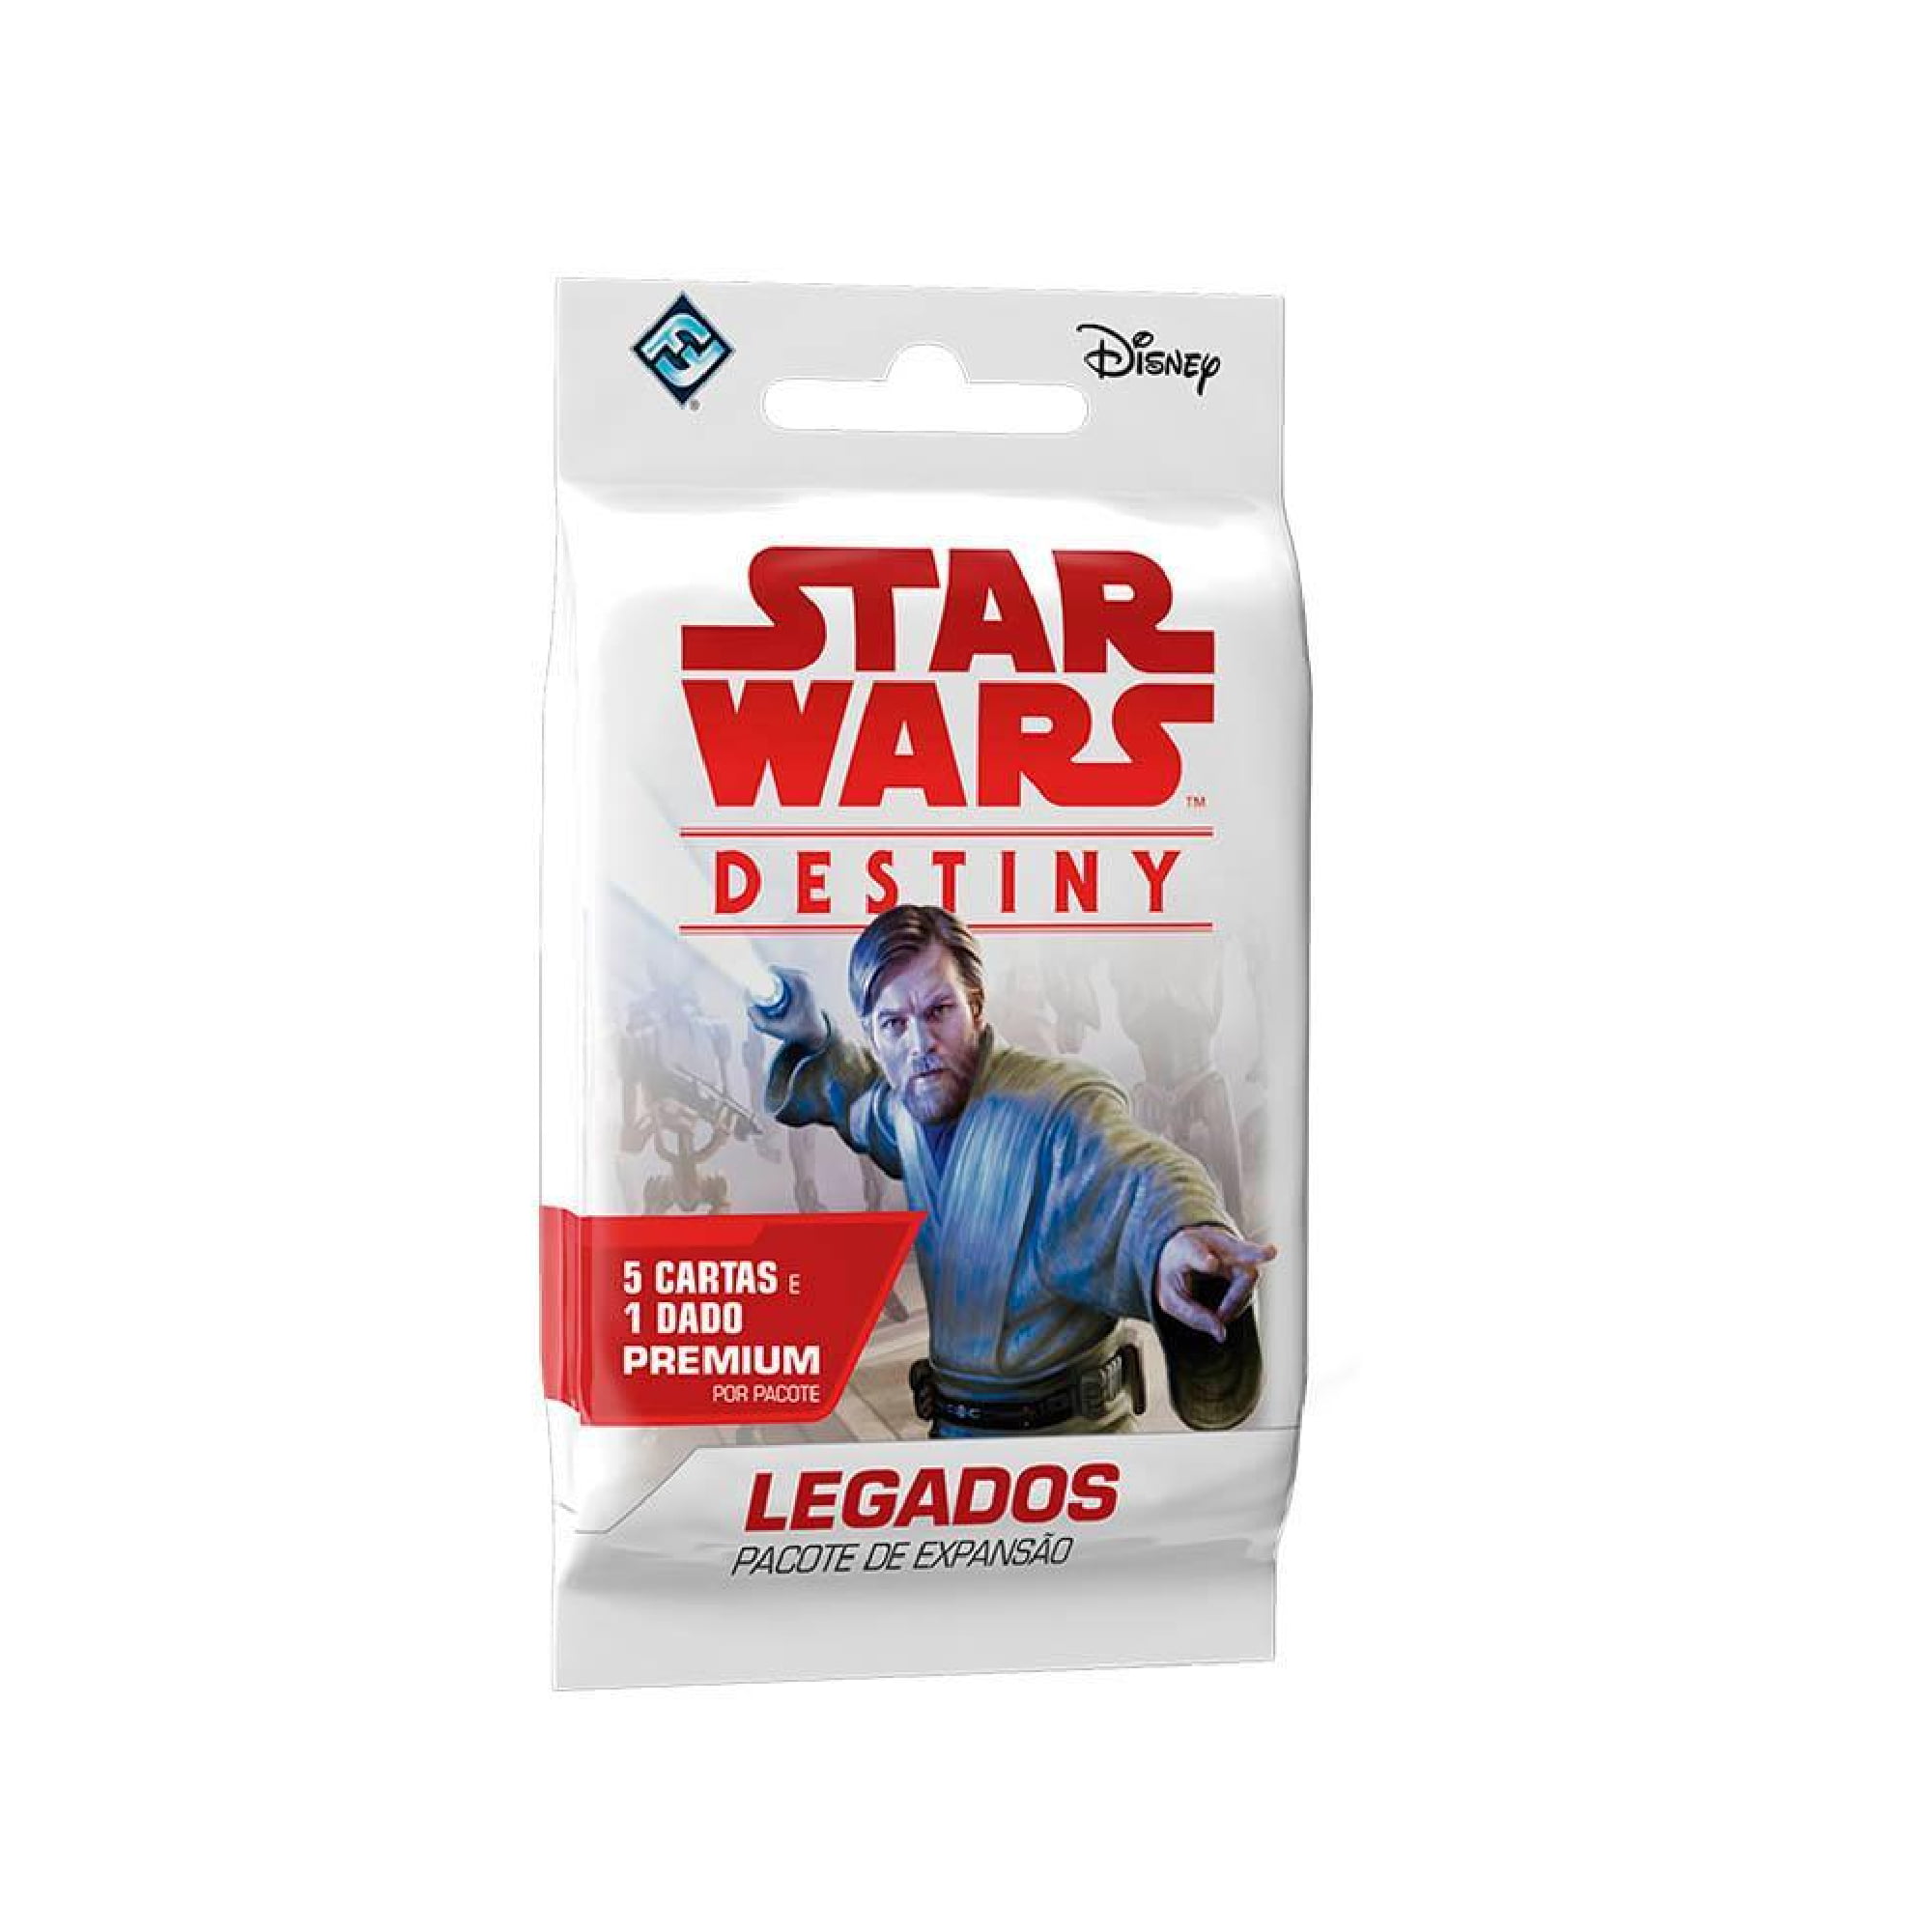 Star Wars Destiny - Legados - Pacote de Booster